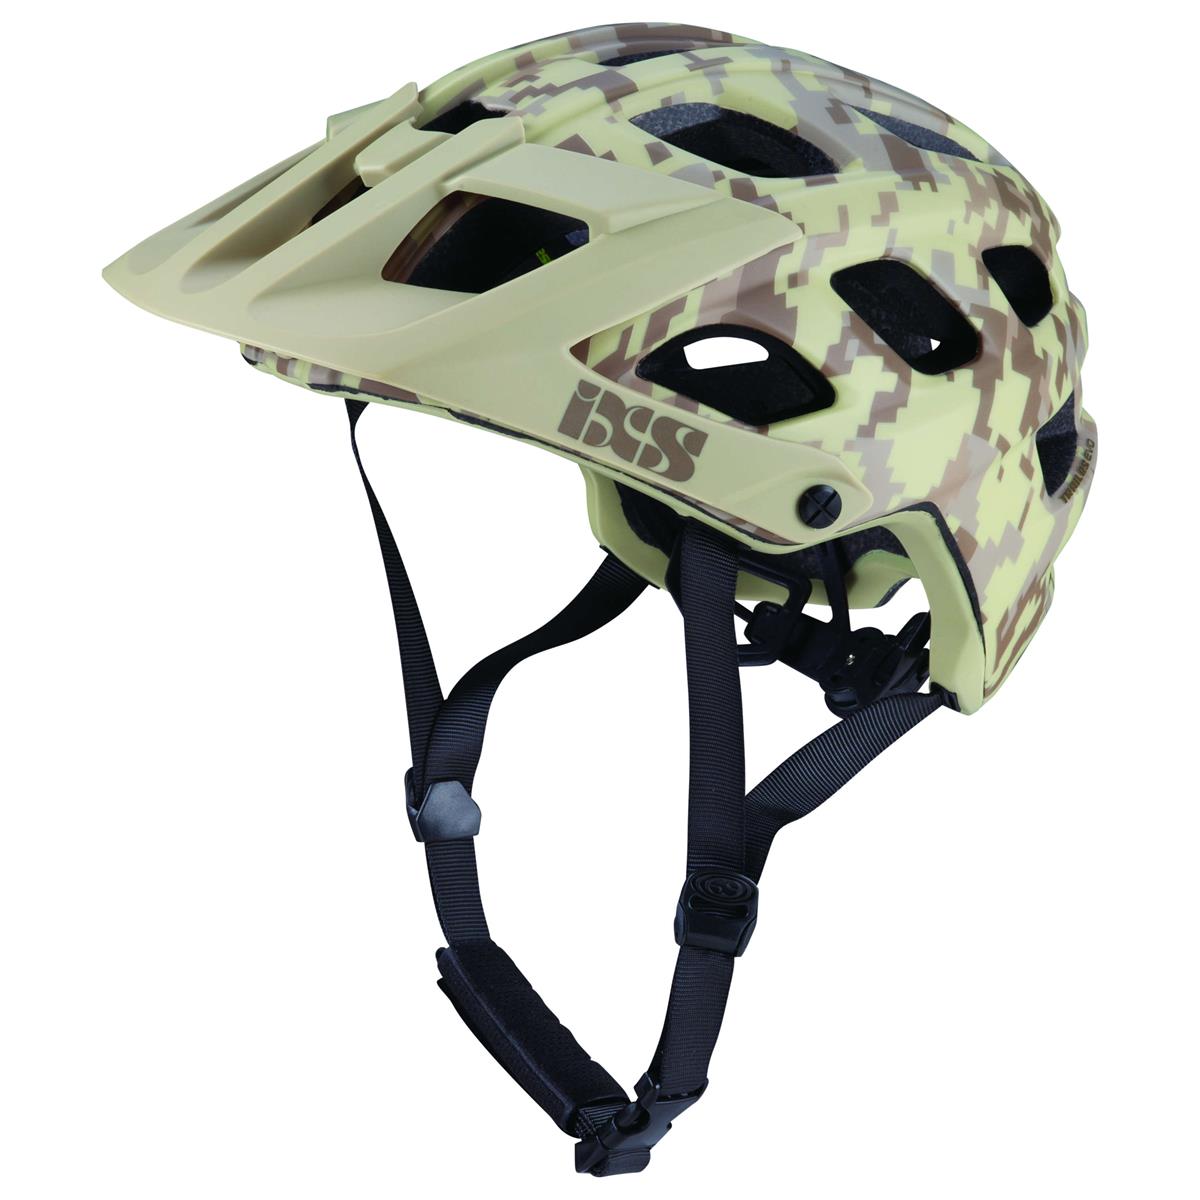 IXS Enduro MTB-Helm Trail RS EVO Camel - Camo Limited Edition